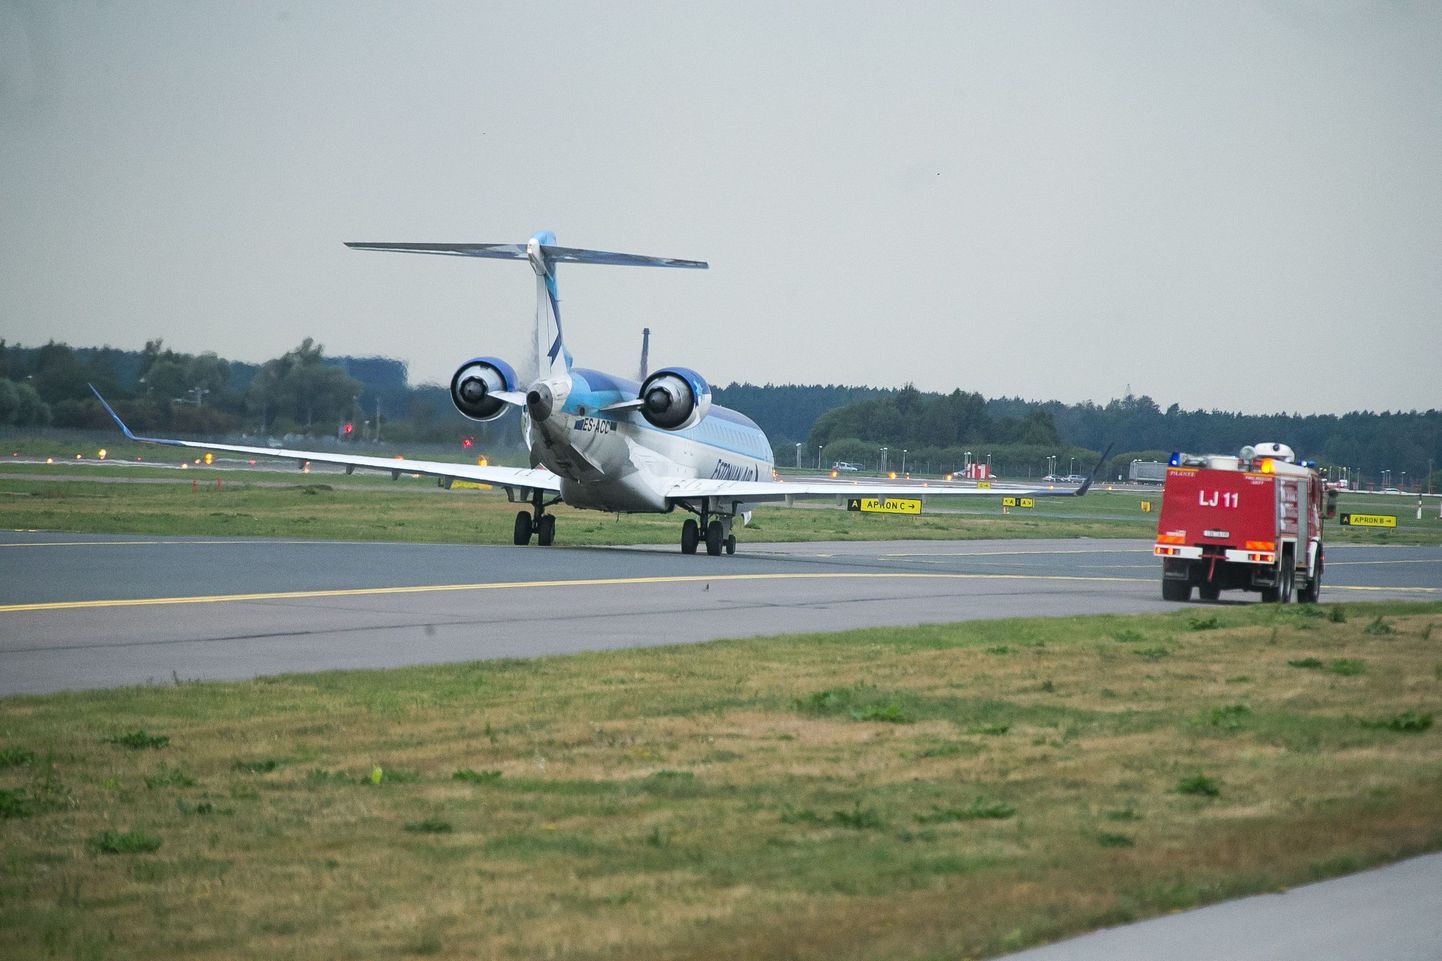 Purunenud rehviga Estonian Airi lennuk maandus probleemideta.